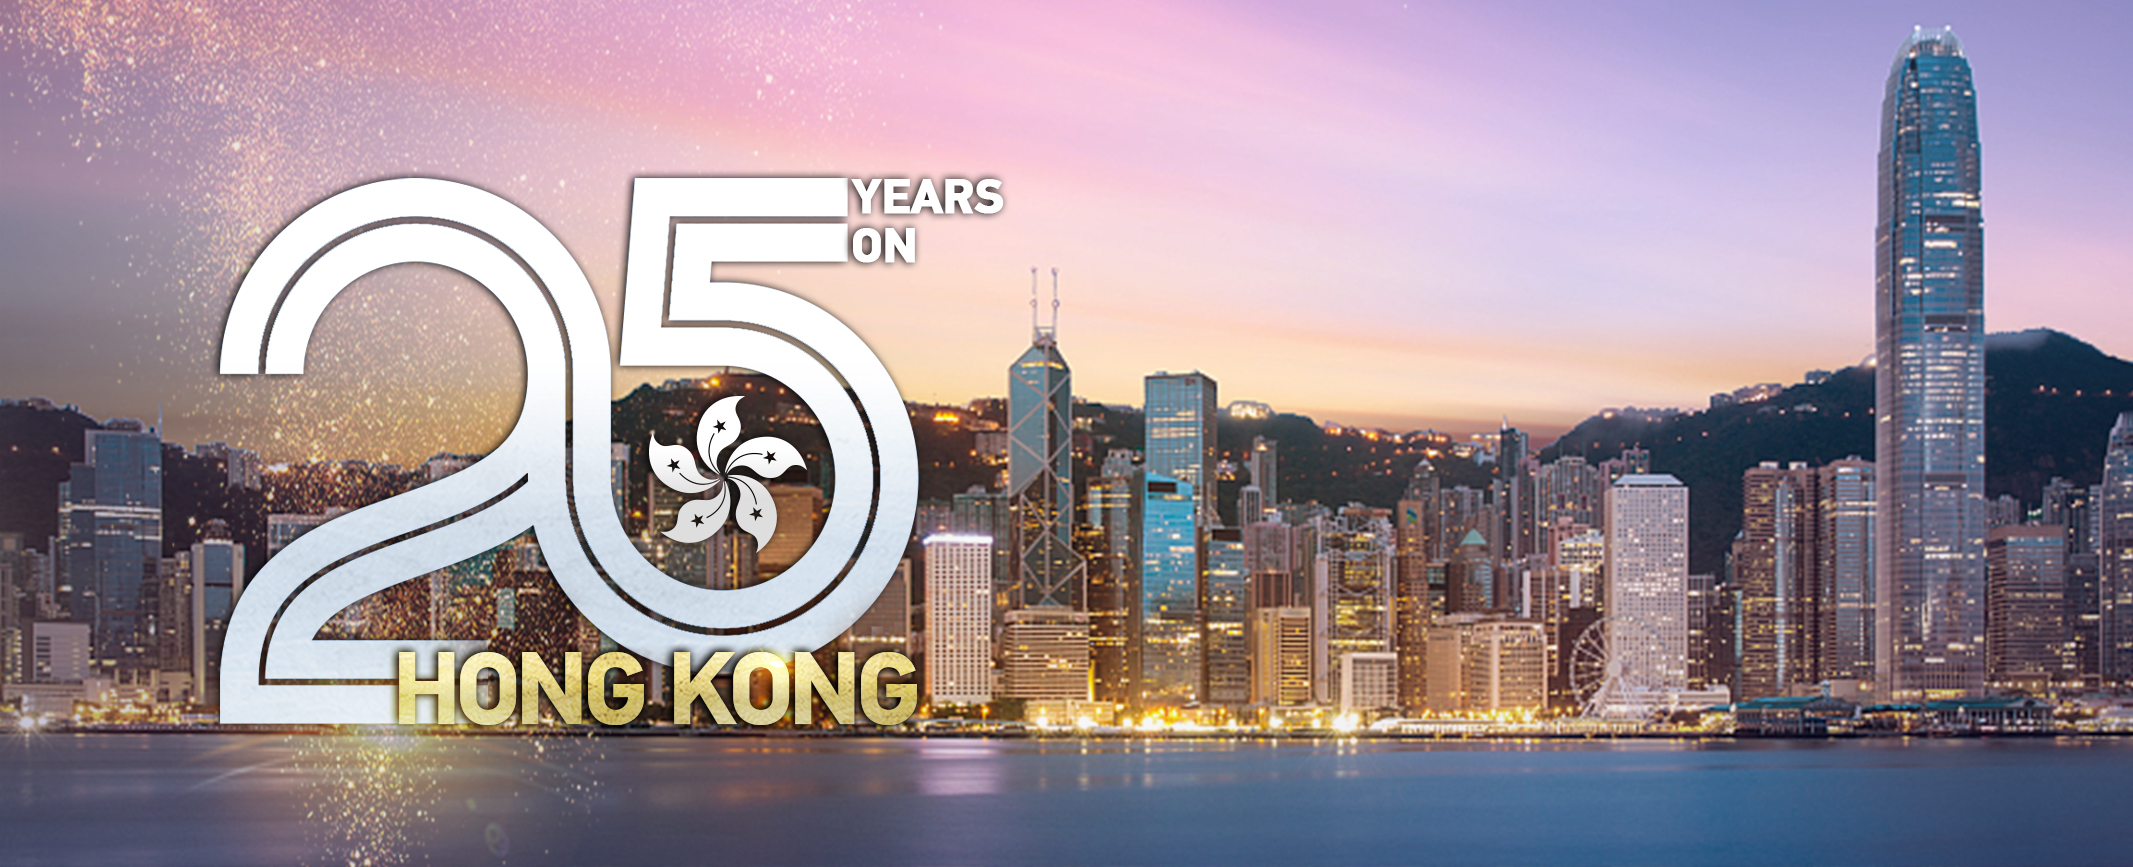 Hong Kong - 25 Years On